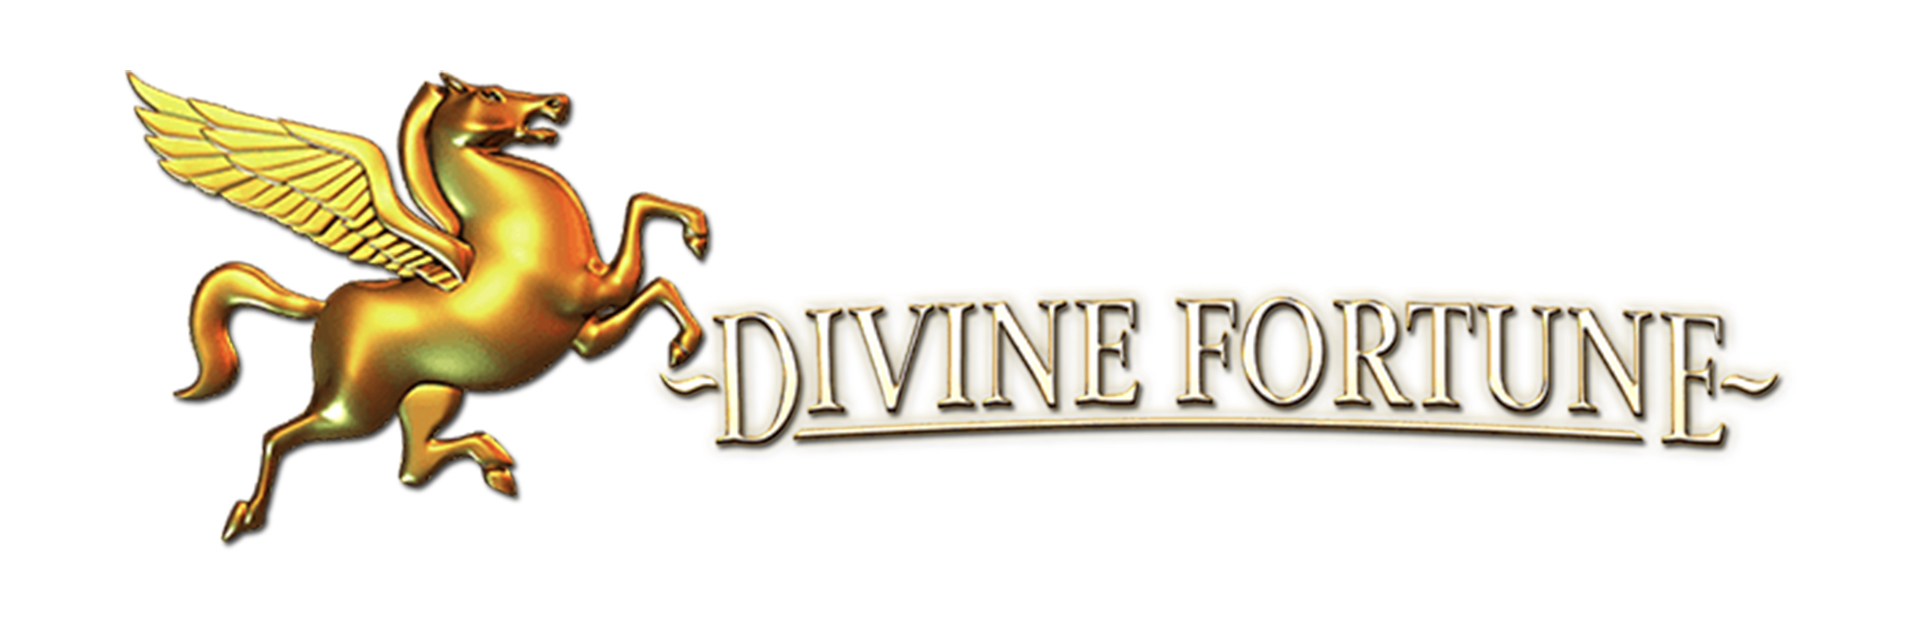 Divine Forune slot machine.